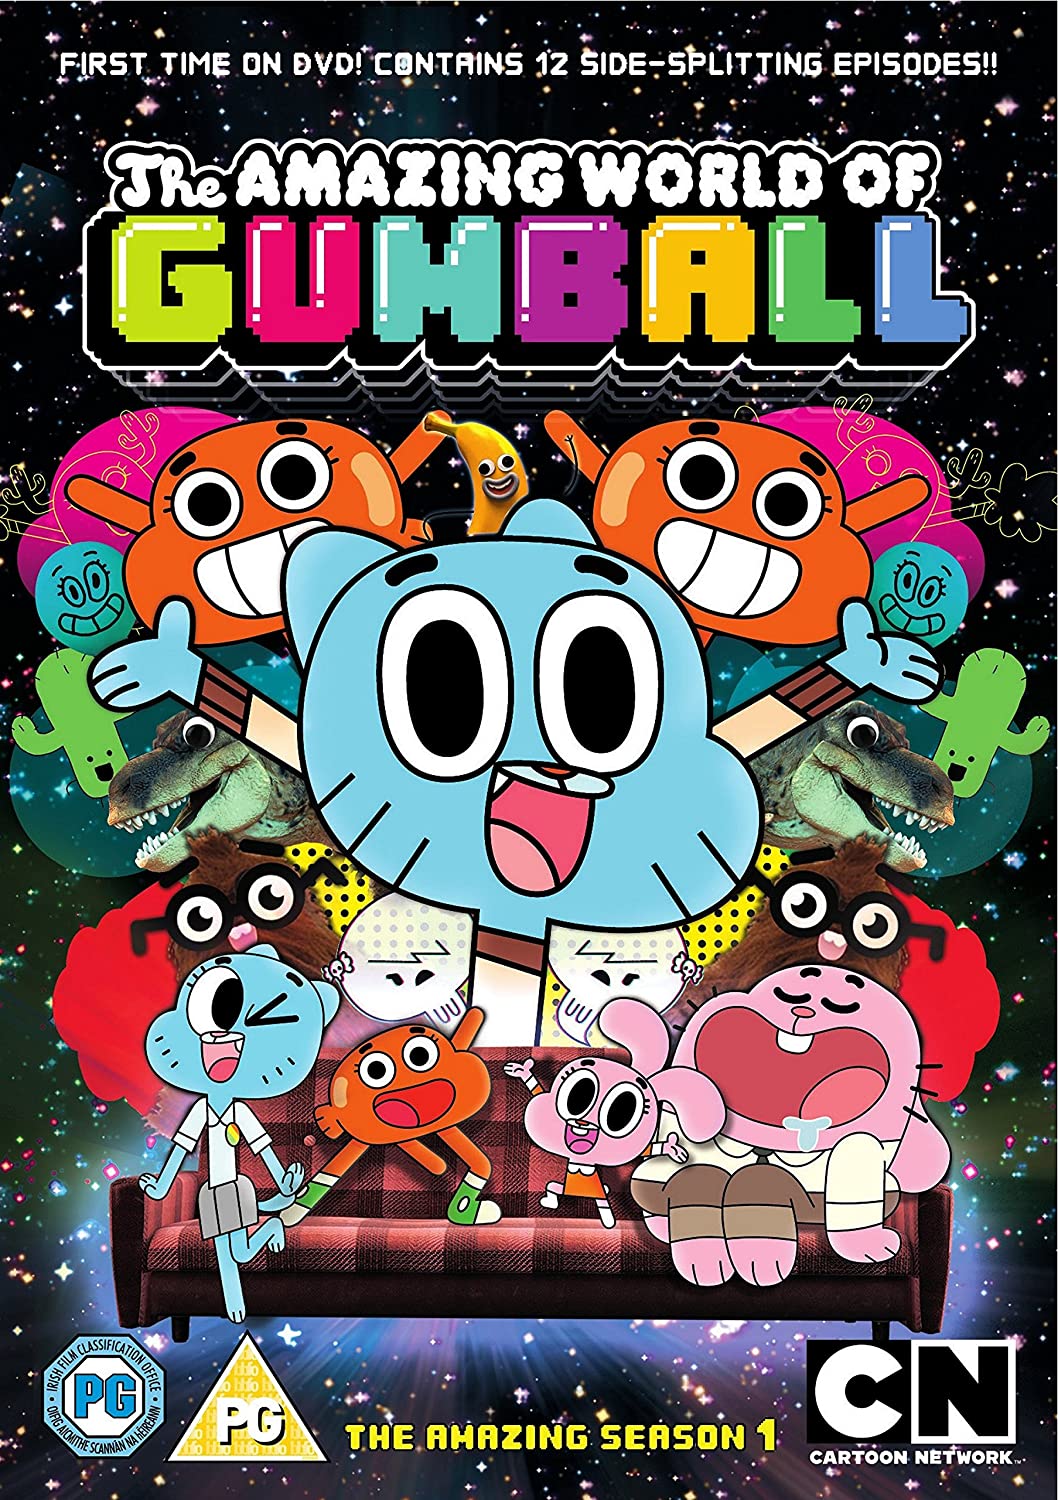 The Amazing World Of Gumball: Season 1 Volume 1 [2011] [2014] - Comedy [DVD]